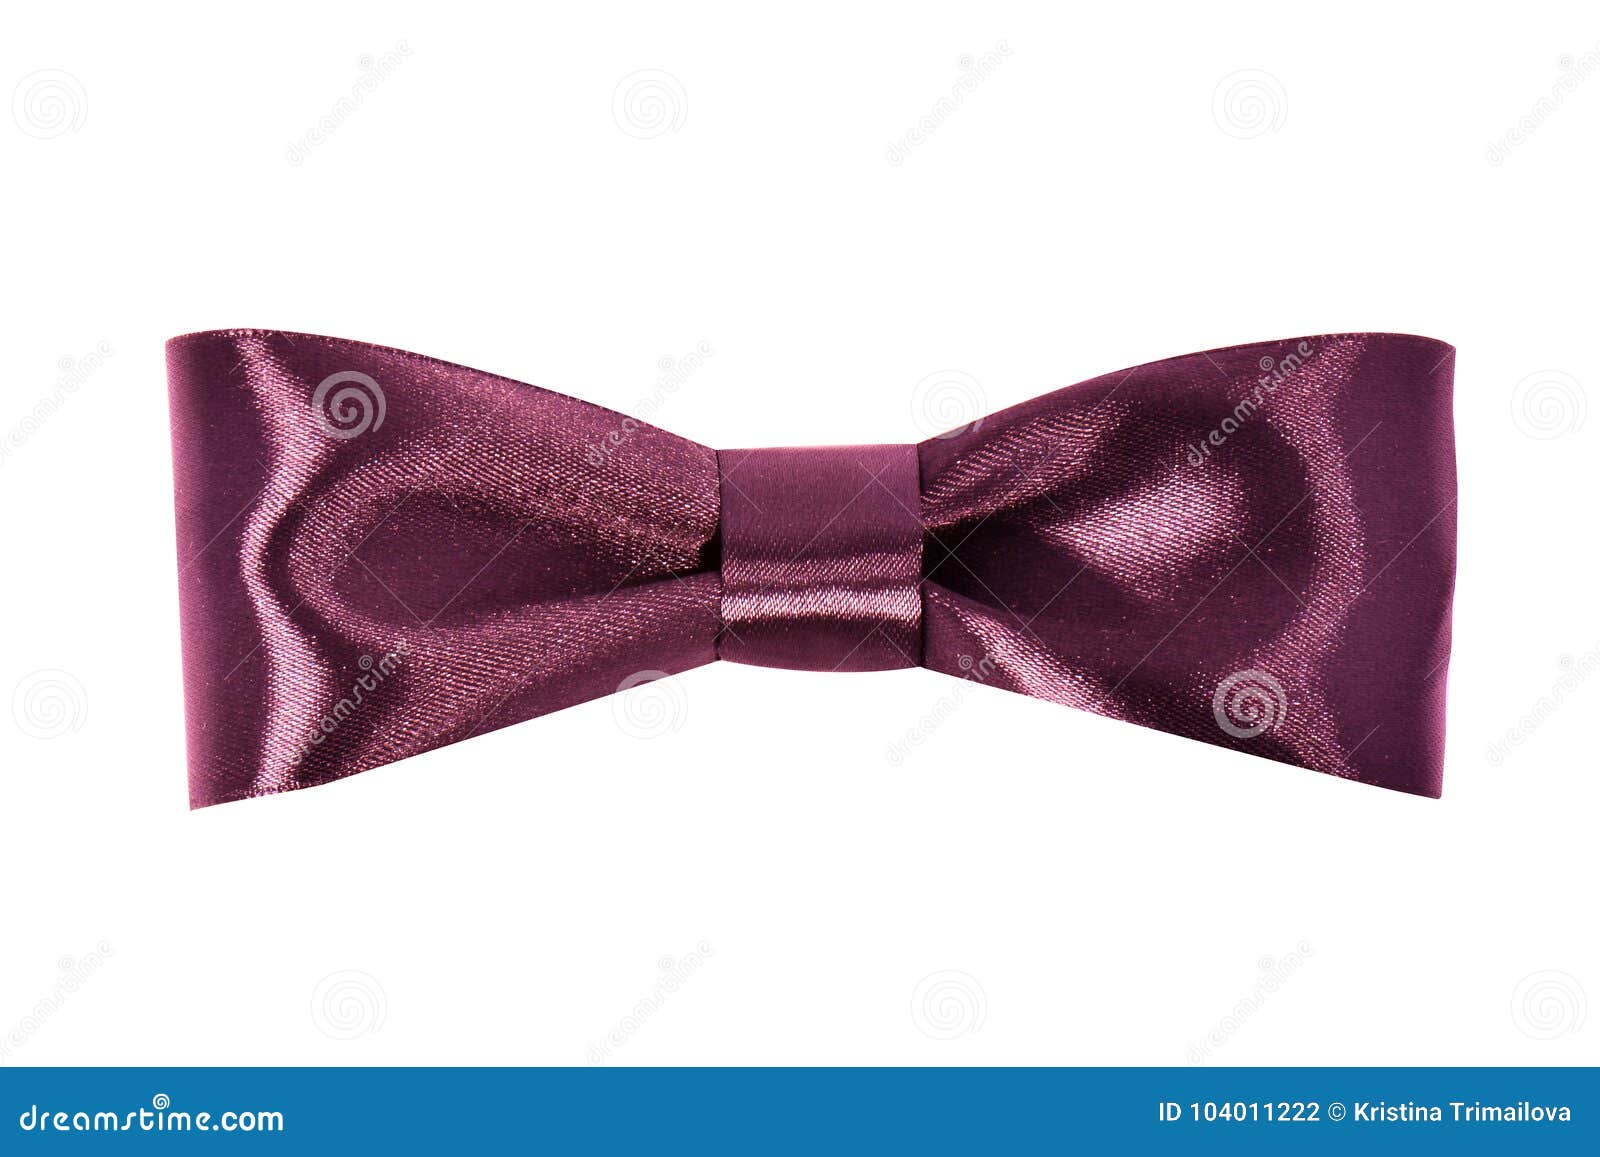 Burgundy ribbon stock image. Image of valentines, tail - 50570653